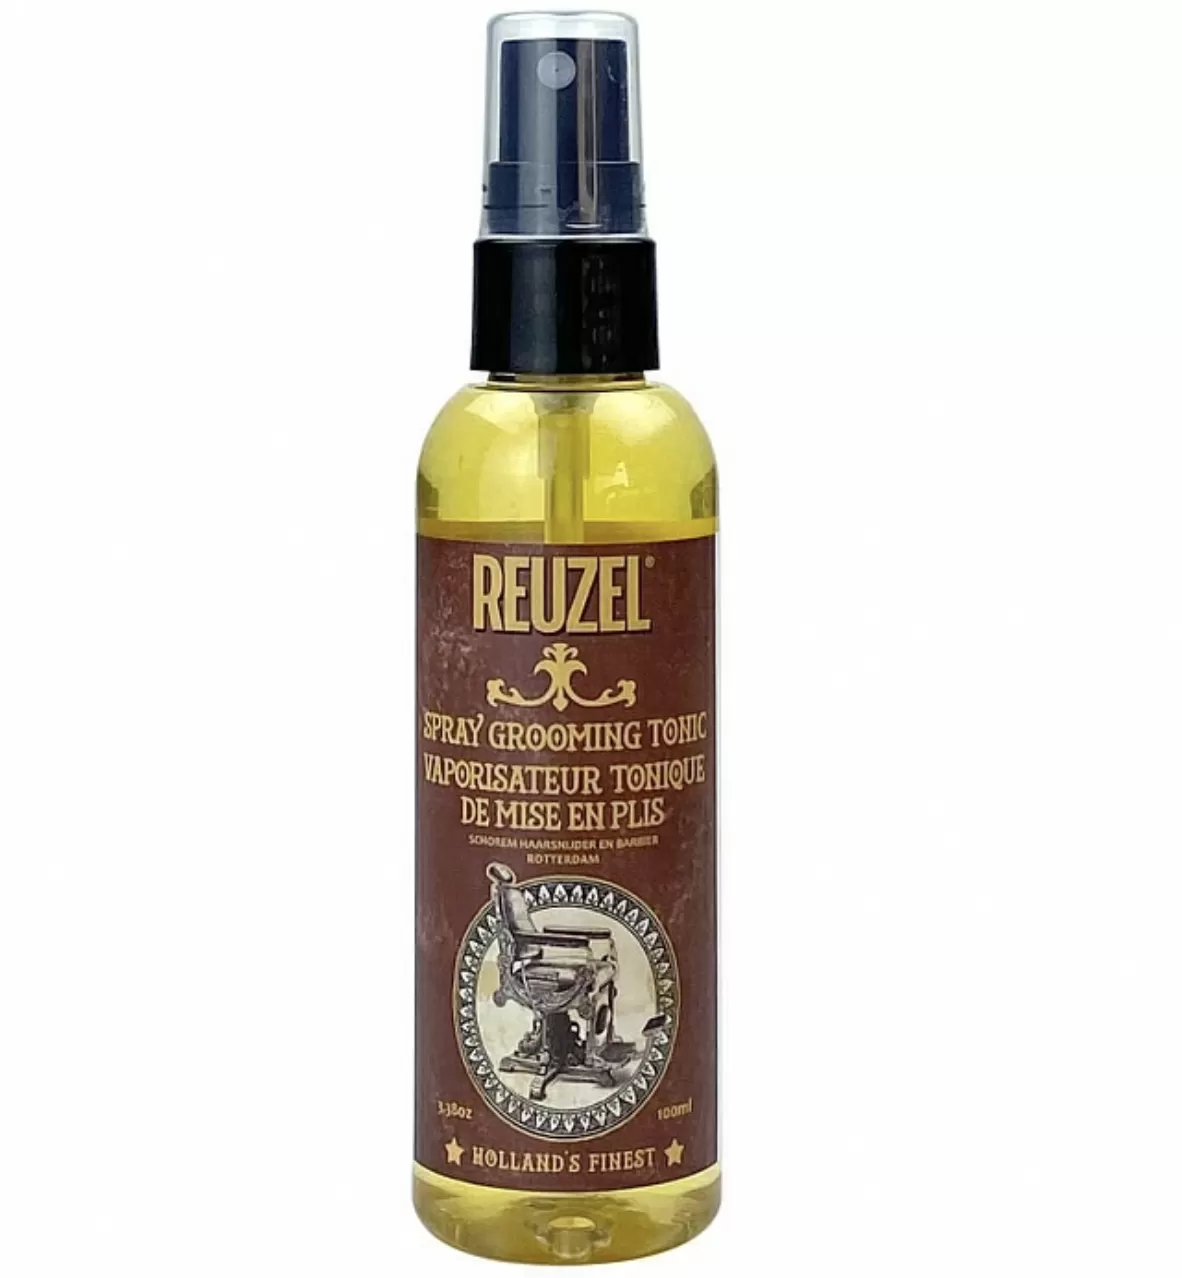 Reuzel Spray Grooming Tonic - Груминг-тоник спрей для волос 100 мл